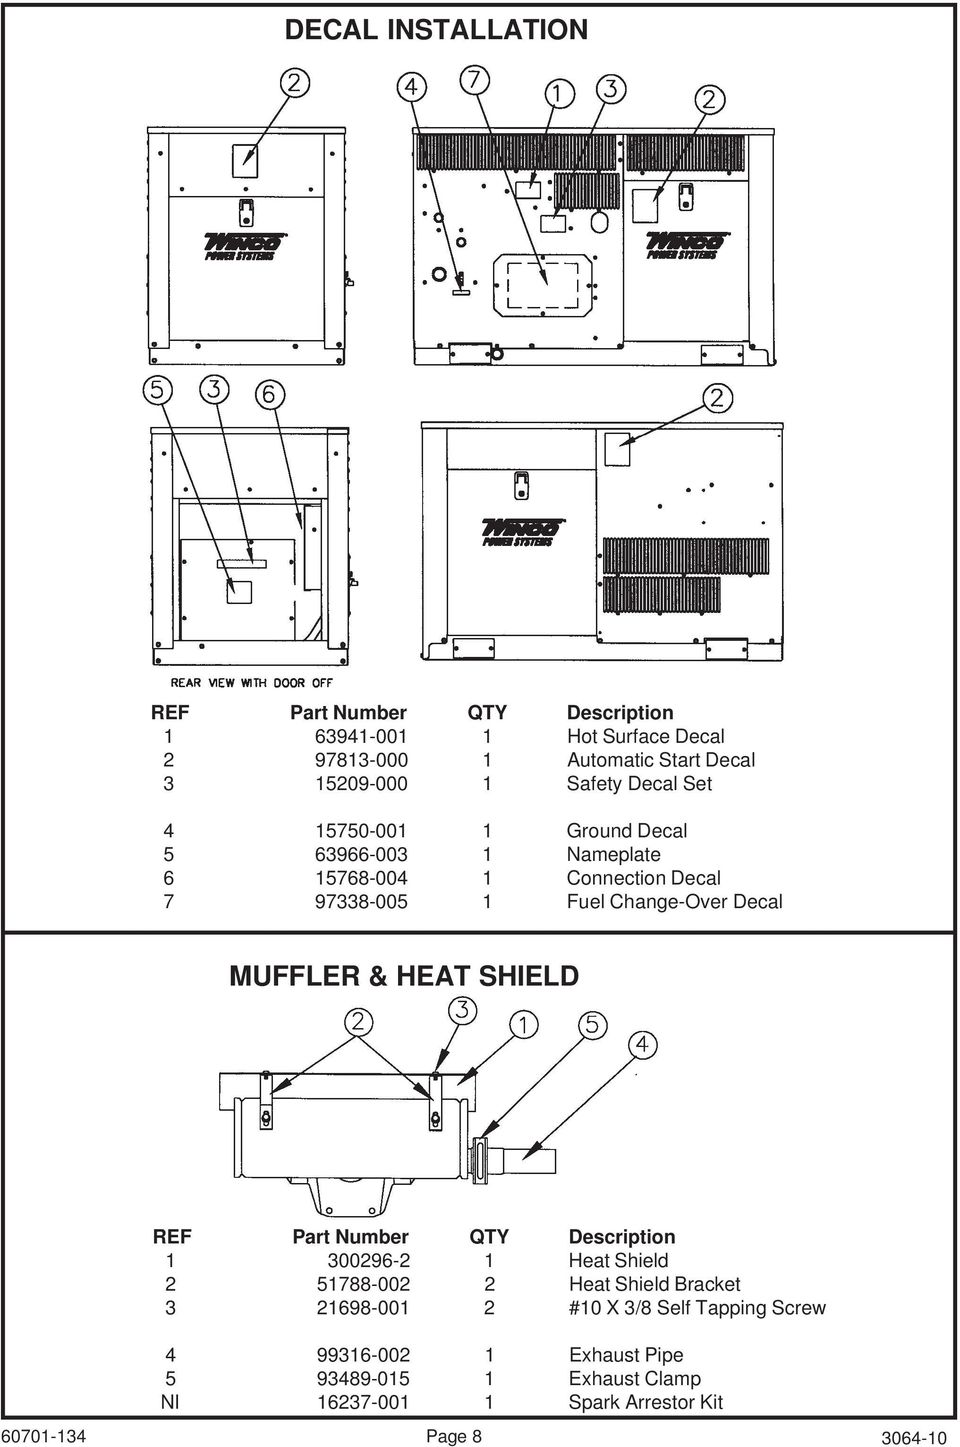 MUFFLER & HEAT SHIELD 1 300296-2 1 Heat Shield 2 51788-002 2 Heat Shield Bracket 3 21698-001 2 #10 X 3/8 Self Tapping